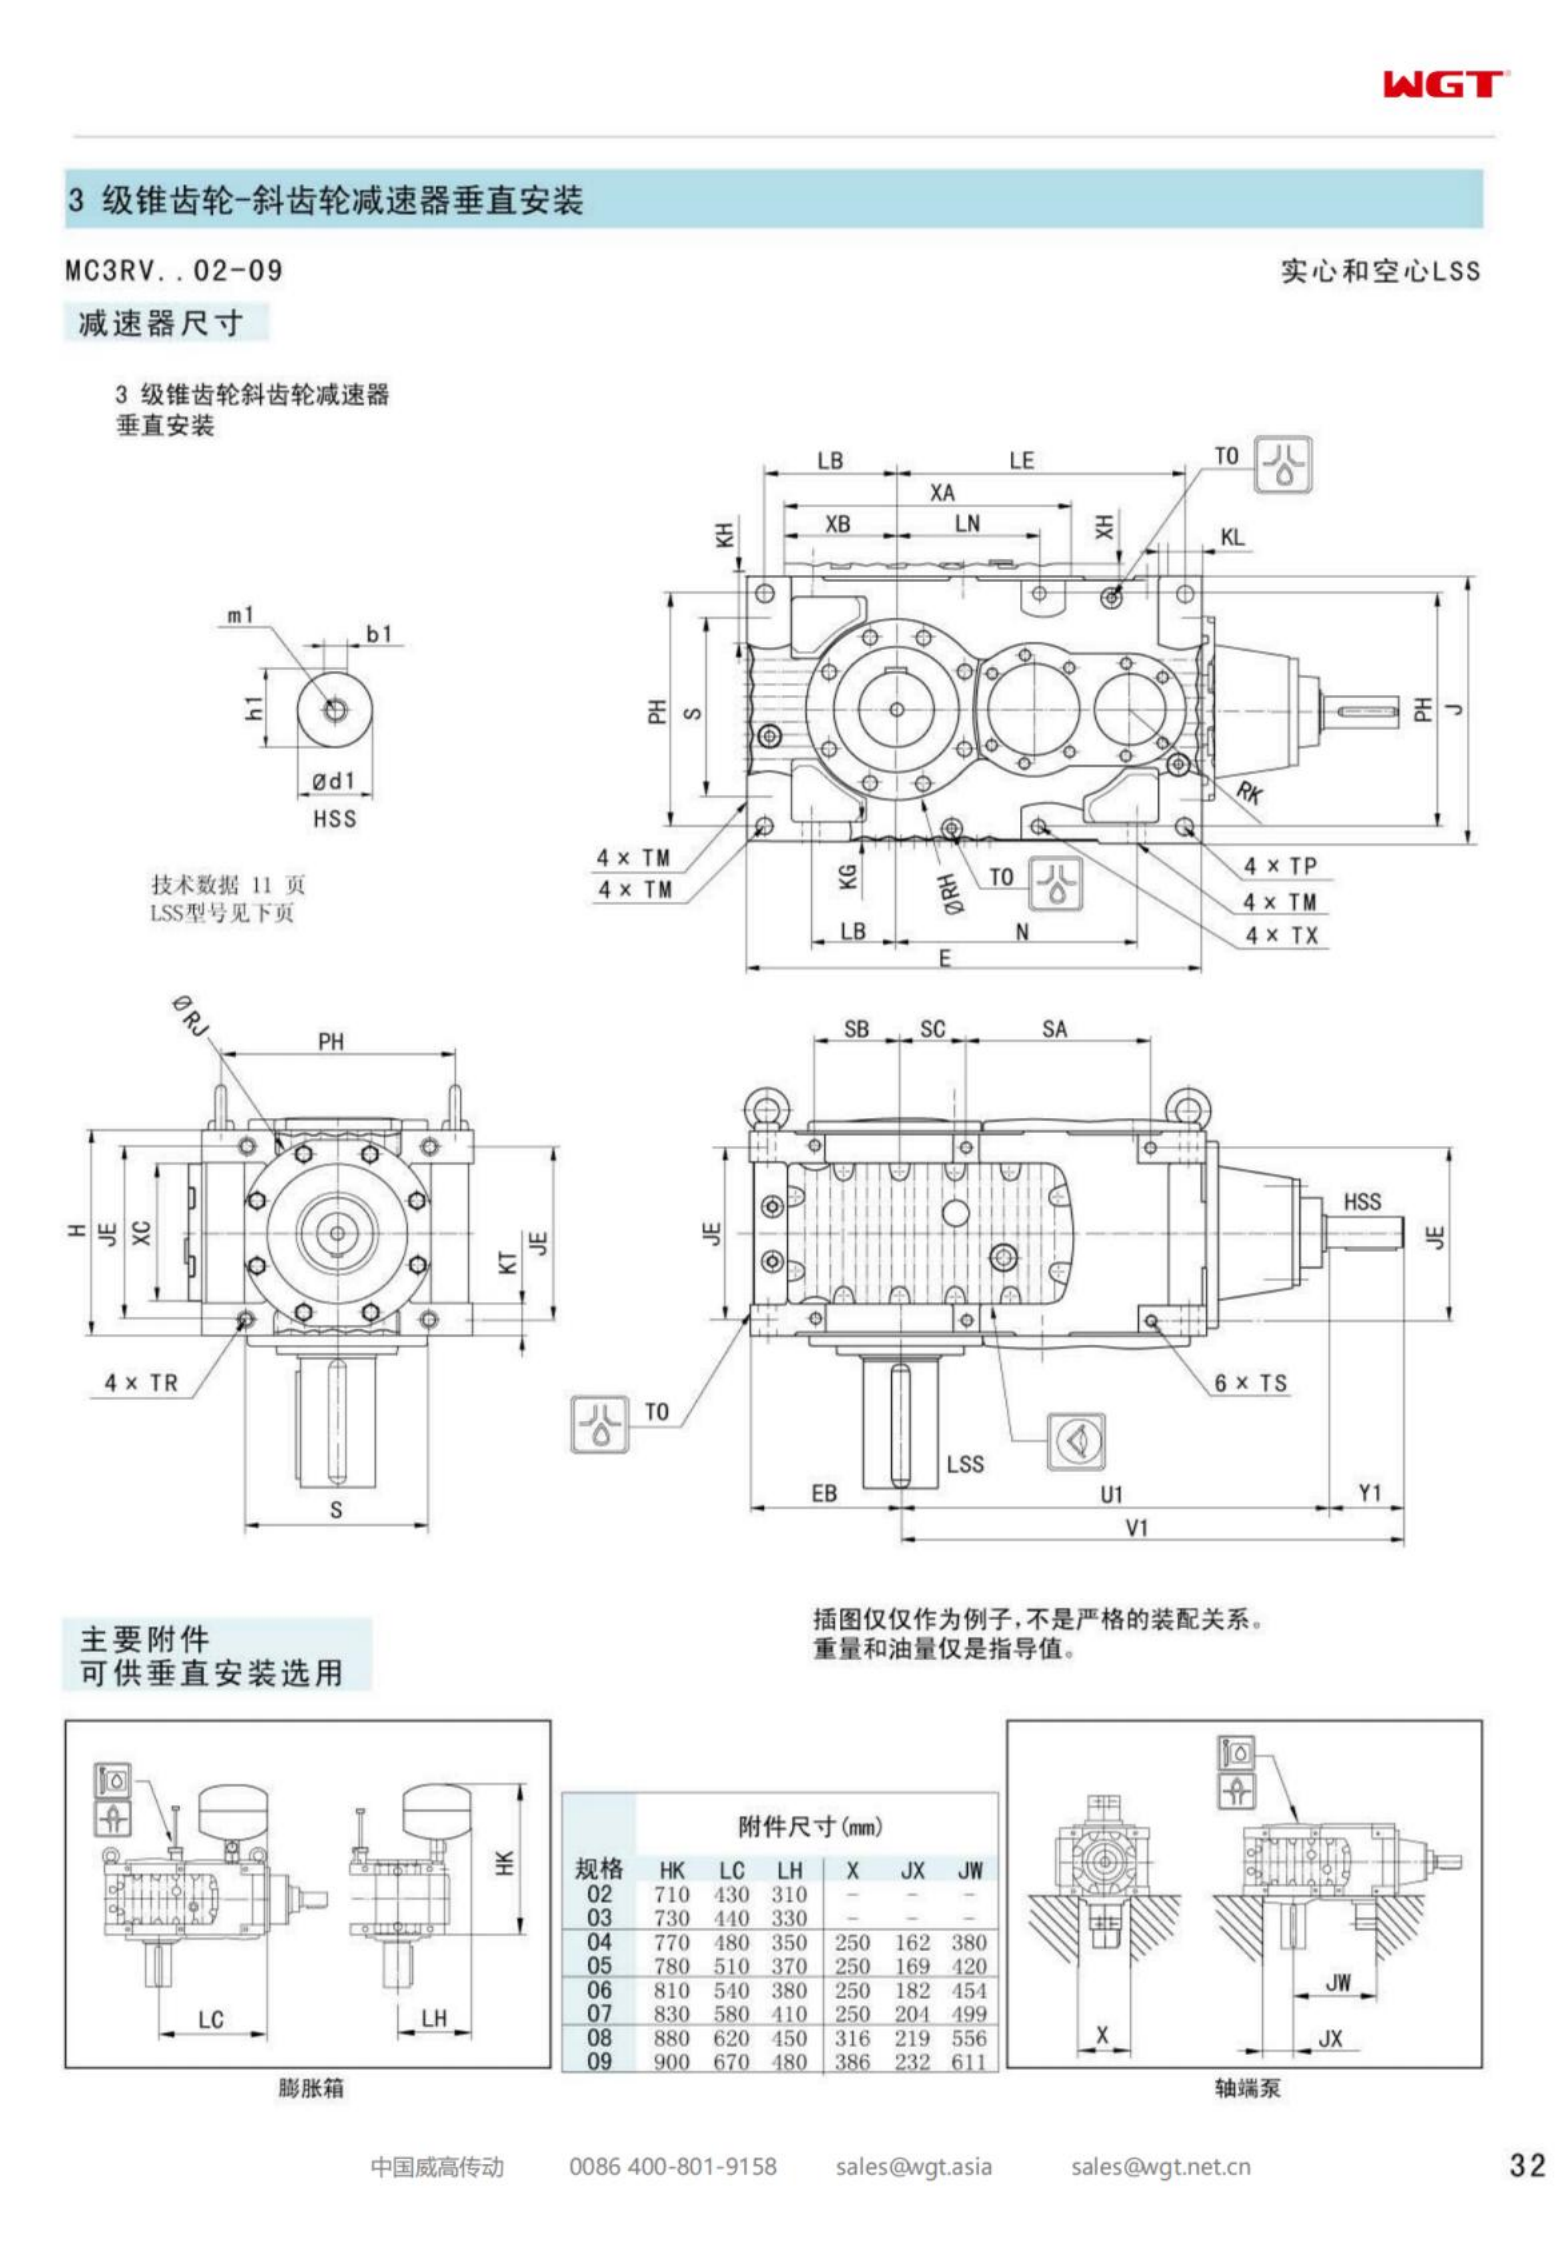 MC3RVHF07 replaces _SEW_MC_Series gearbox (patent)